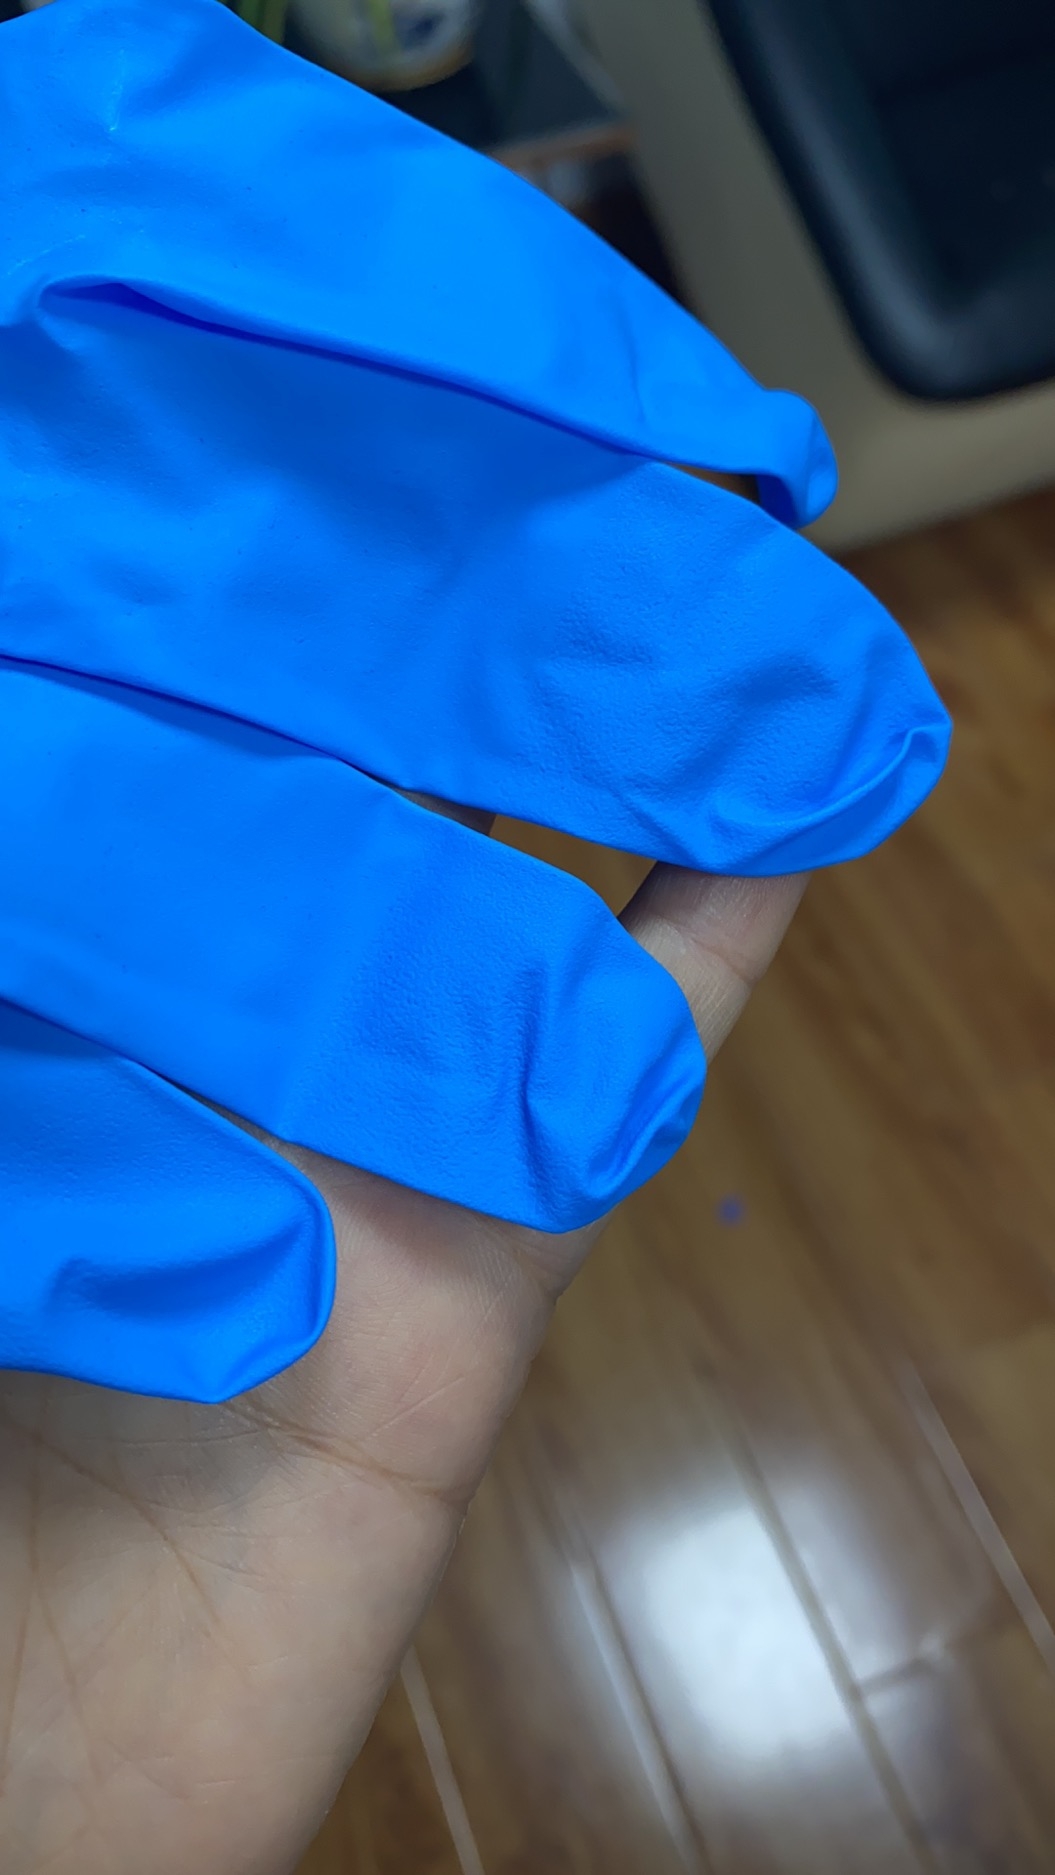 NACOSA Medical grade examination glove nitrile gloves FDA510k certificated OGT ready stock in New York